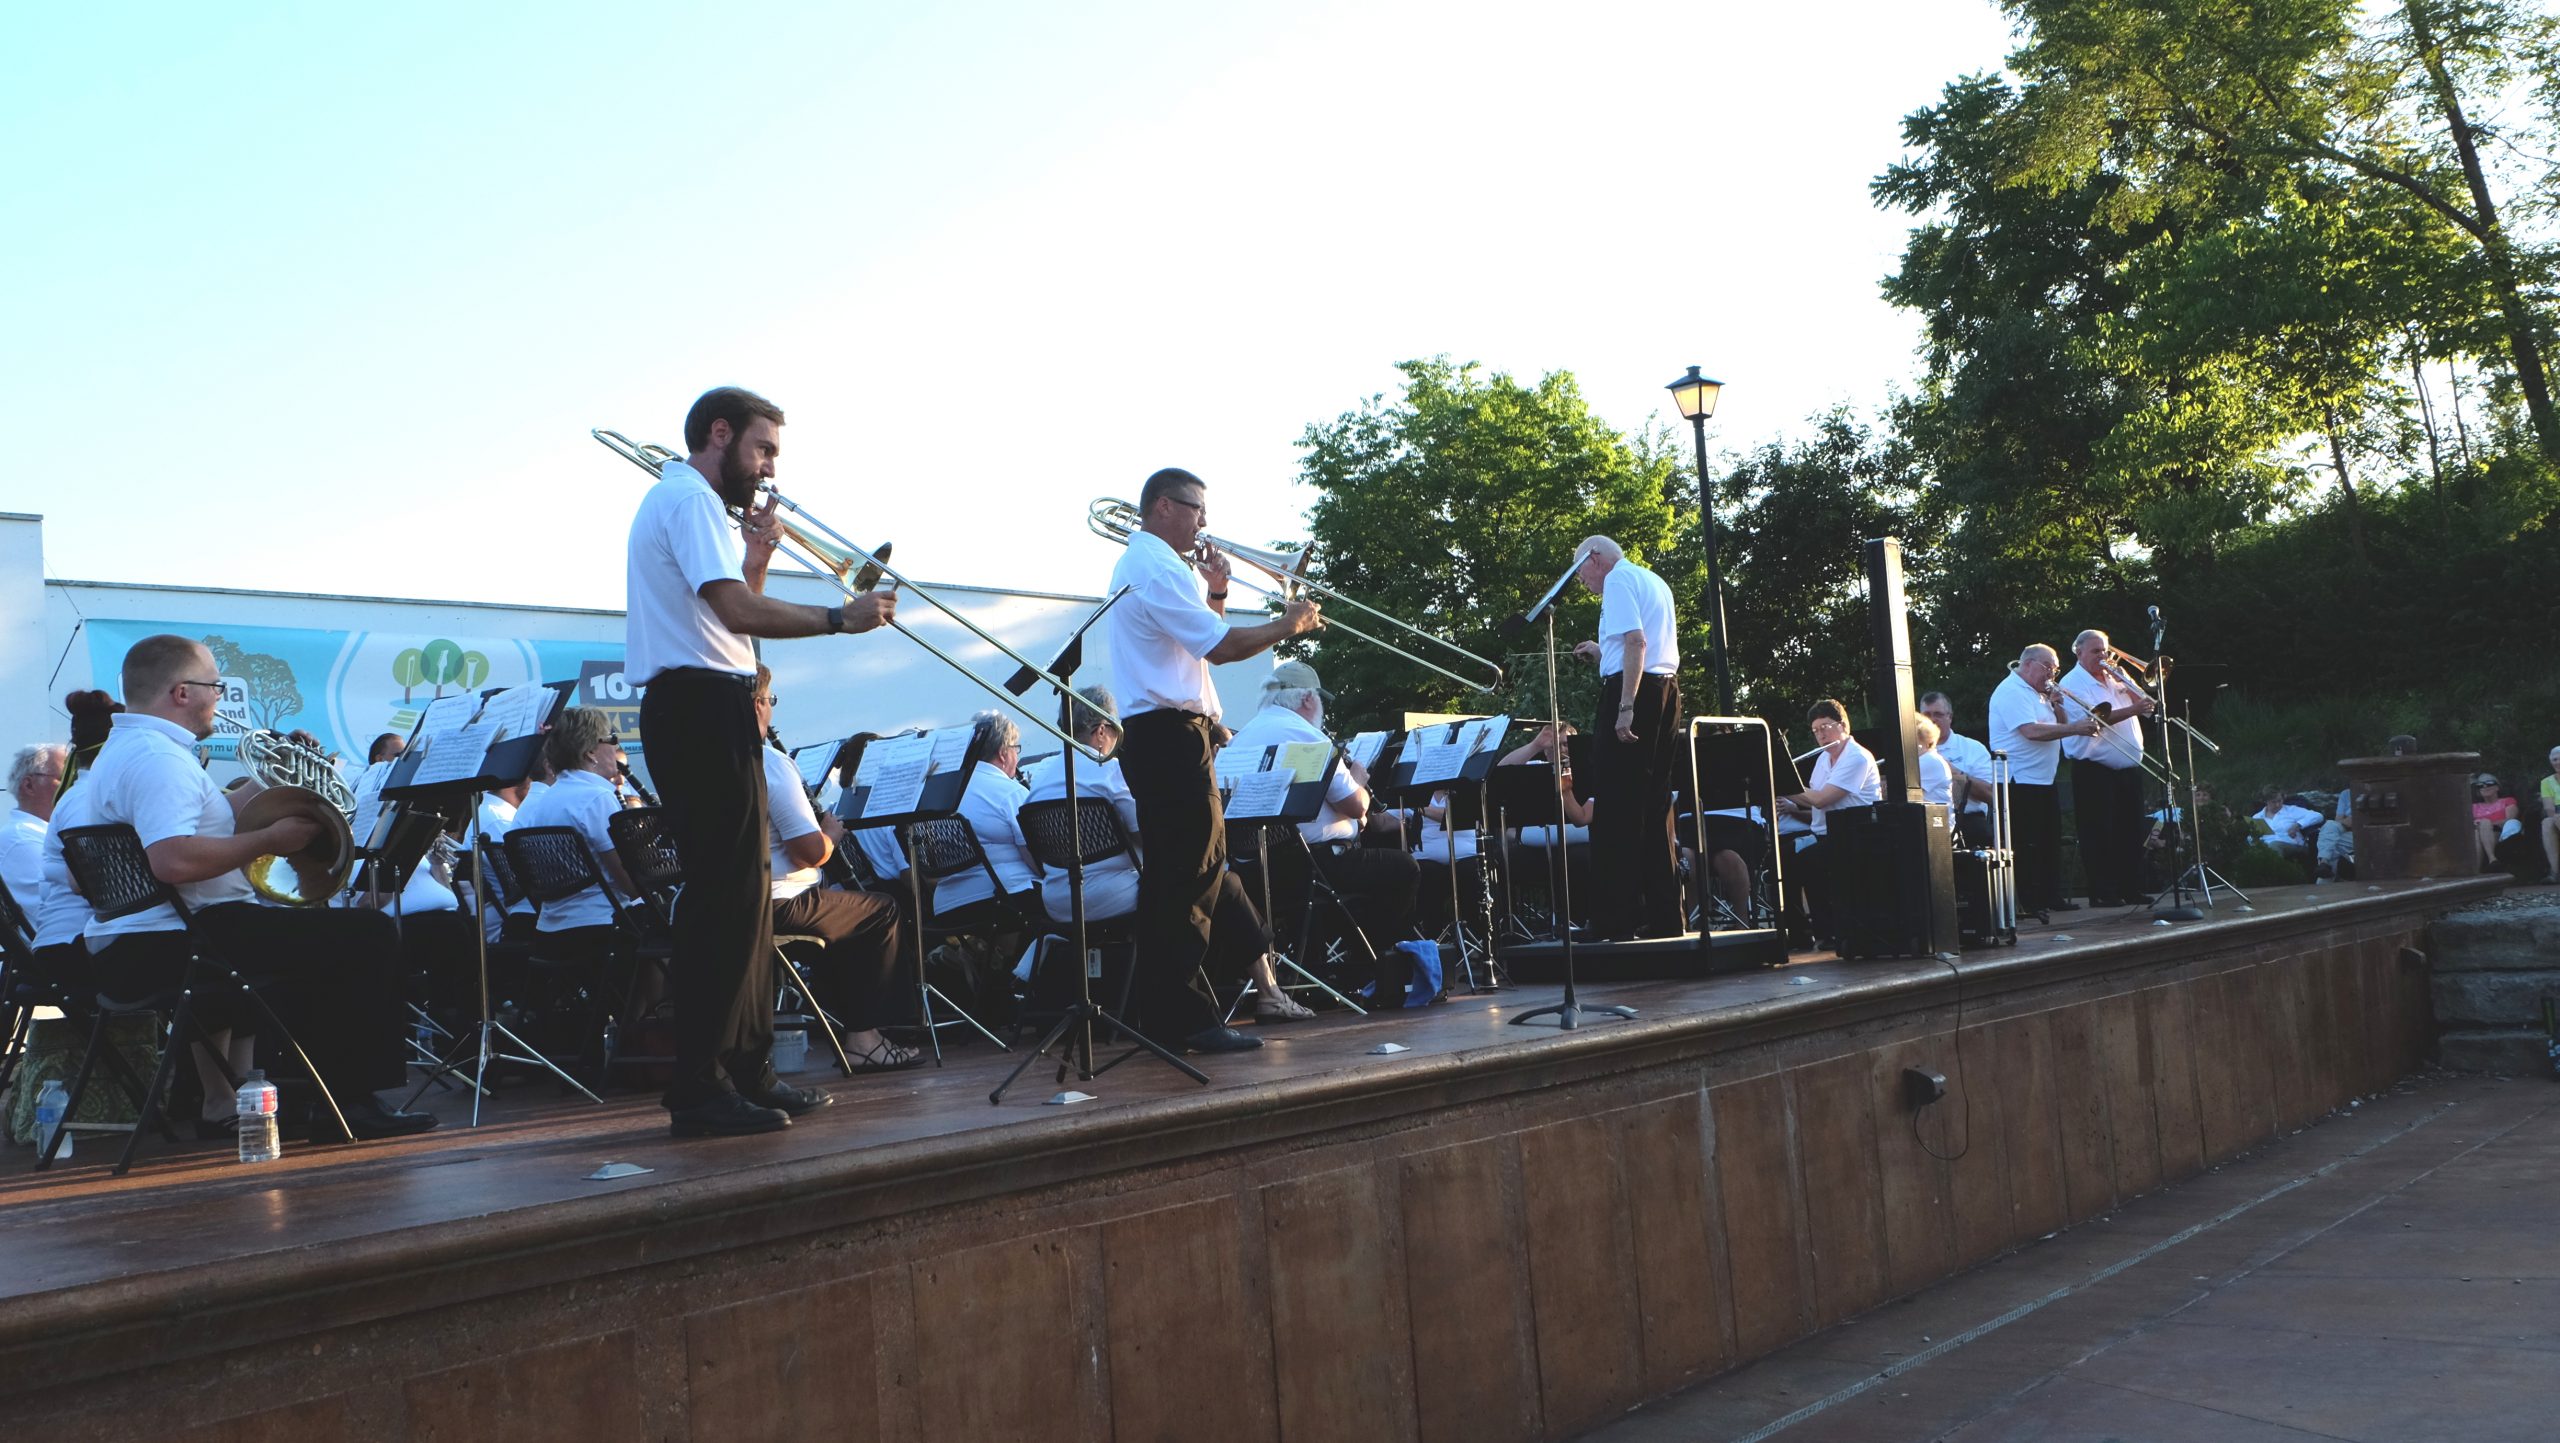 The Missouri Symphony Society performs at Stephens Lake Park.